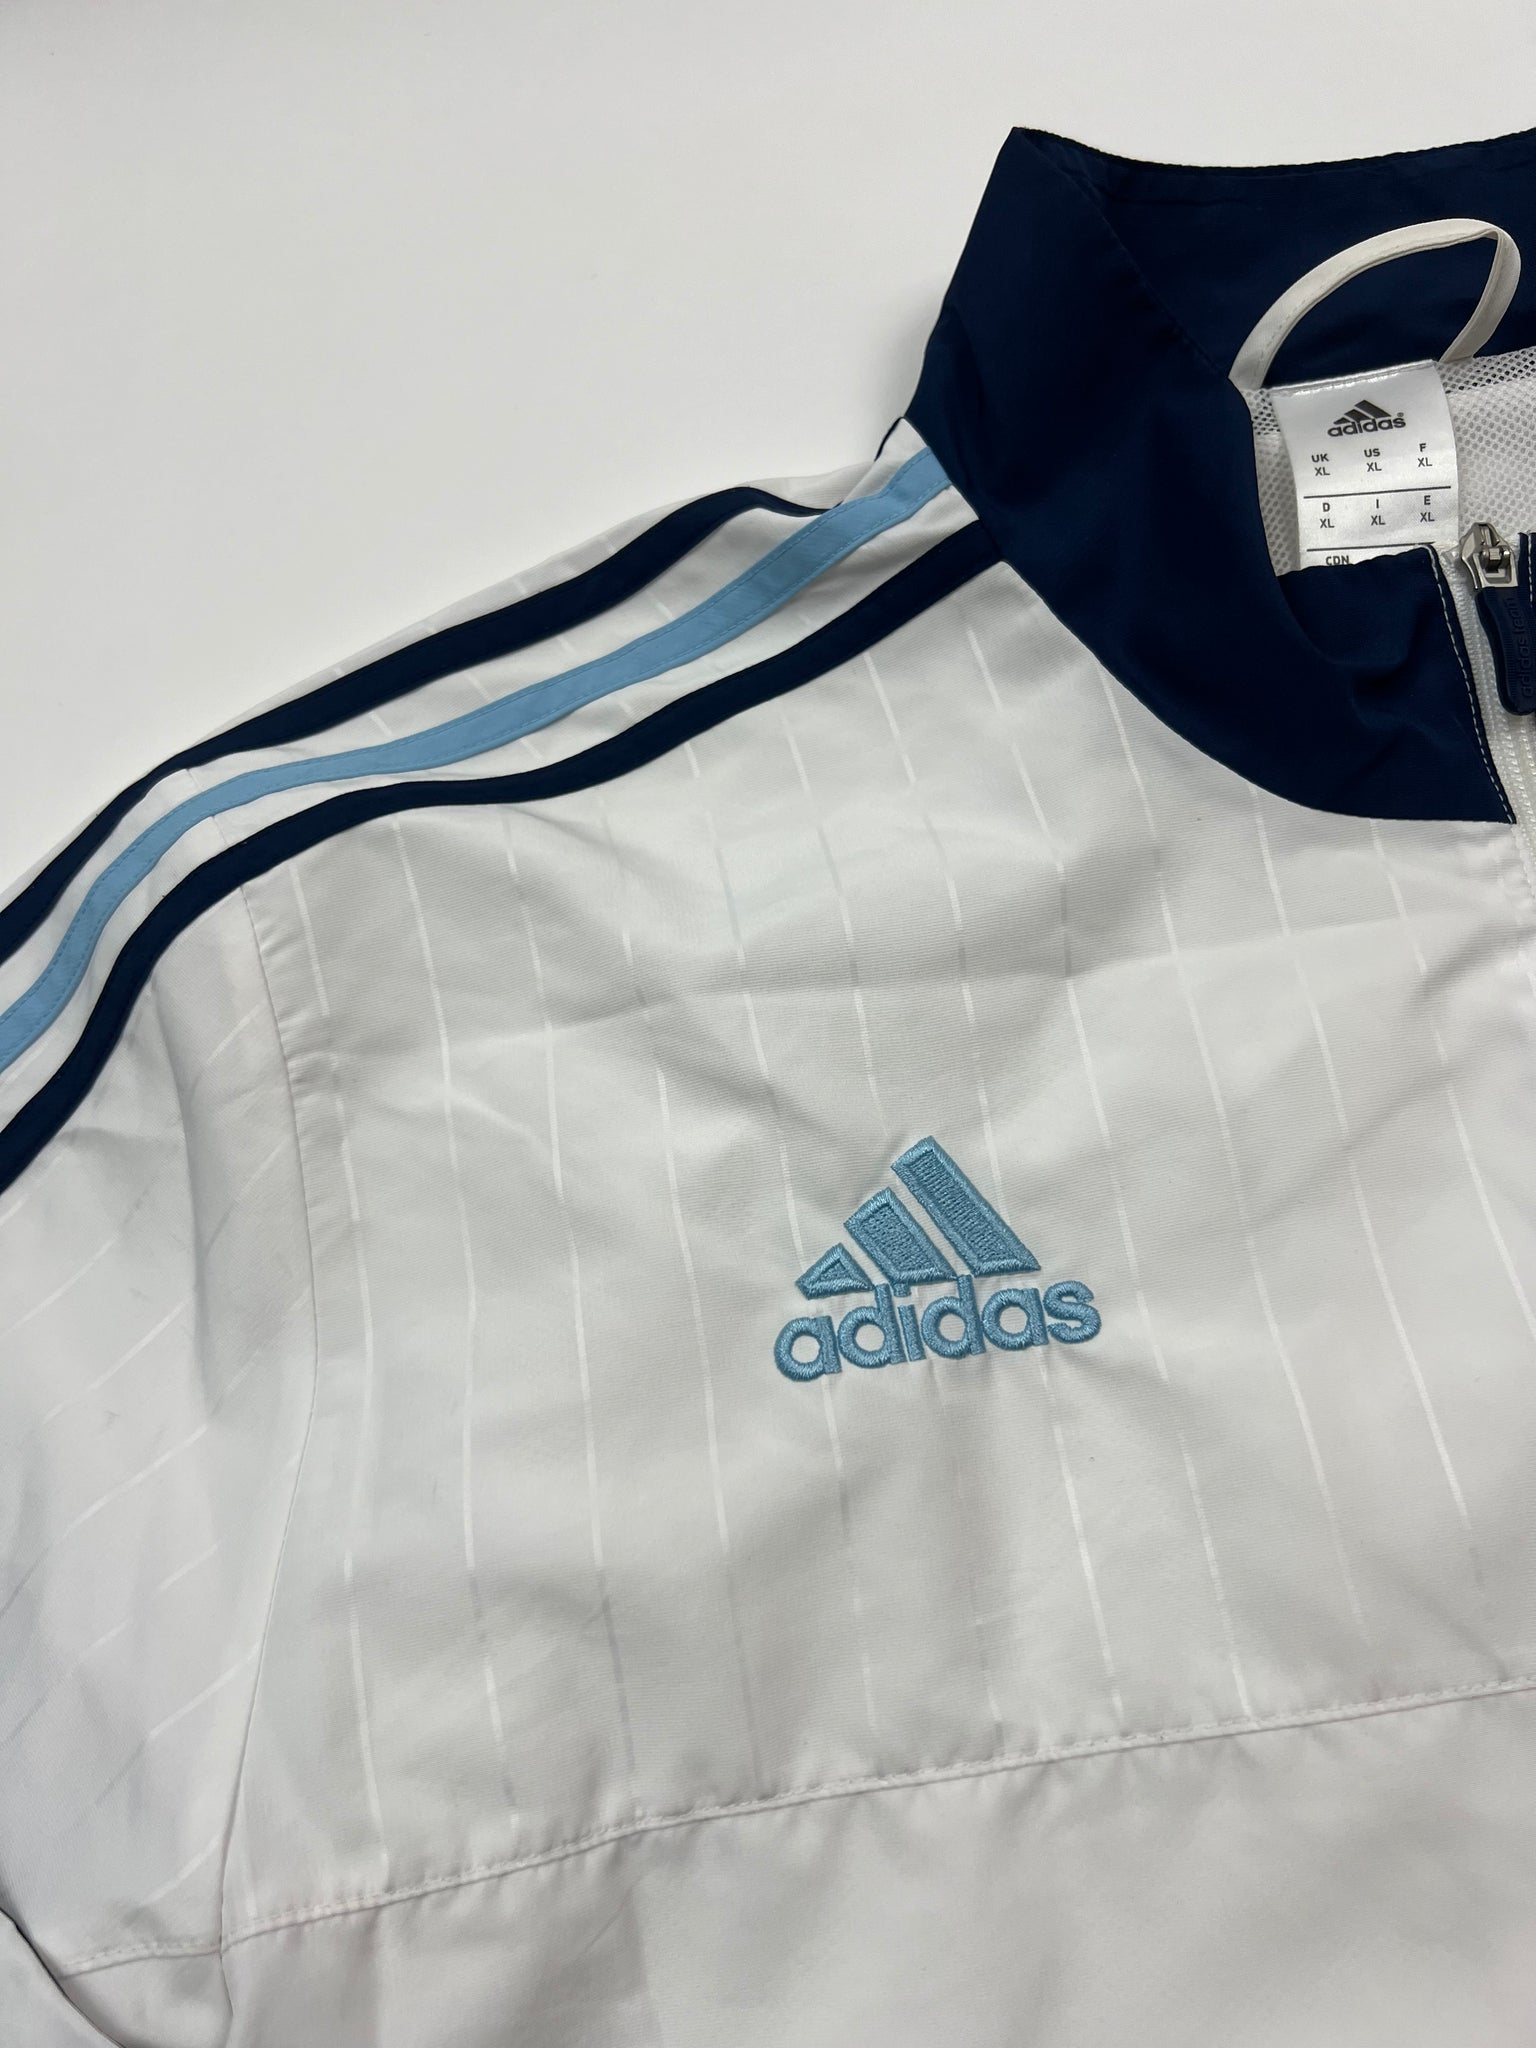 Adidas Argentina Track Jacket (XL)